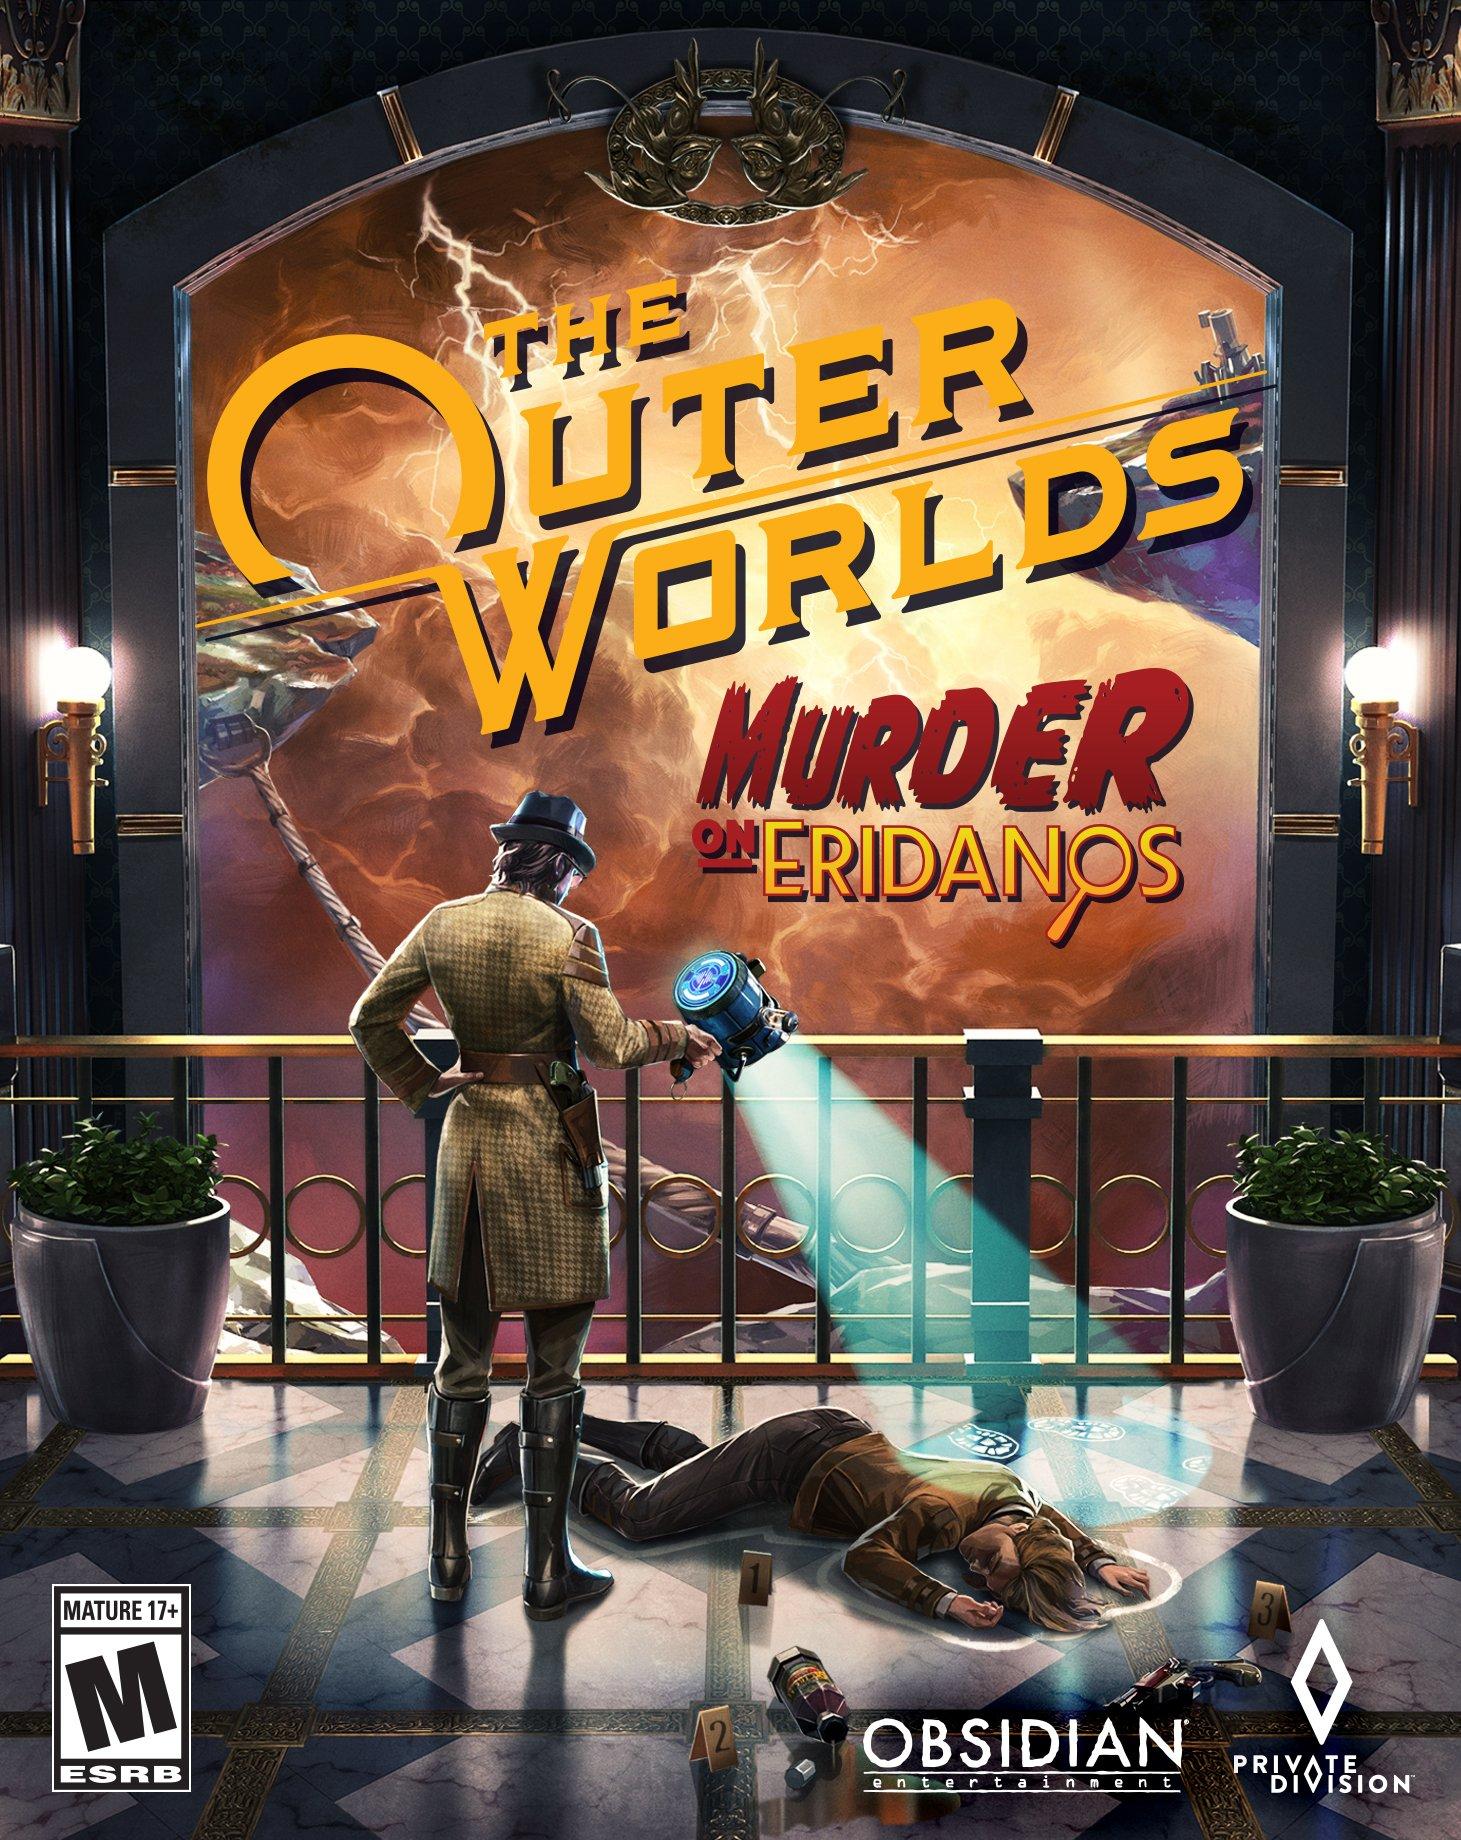 Murder on Eridanos  The Outer Worlds Wiki